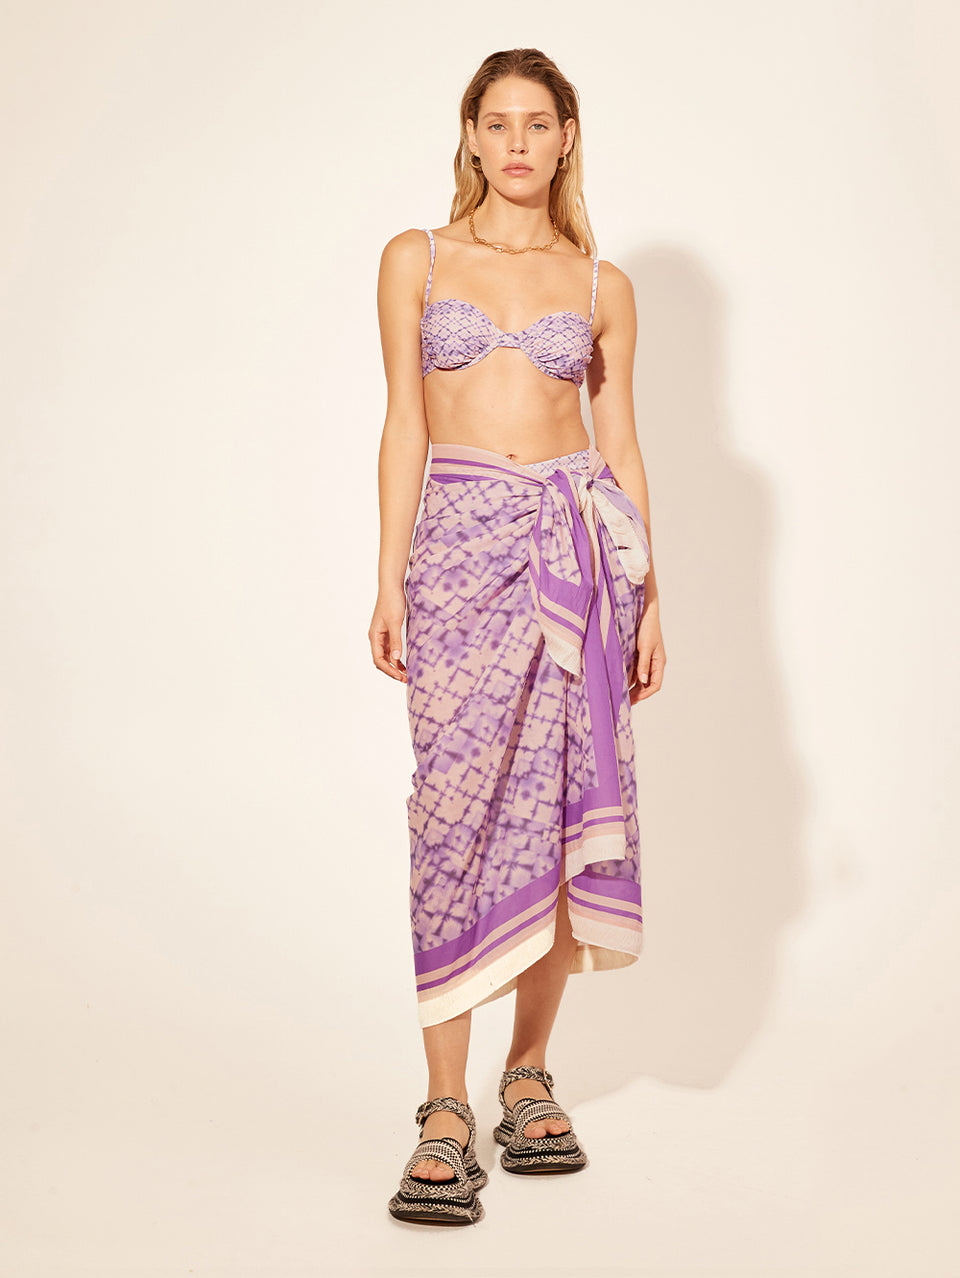 Alice Pareo KIVARI | Model wears purple tie dye printed sarong